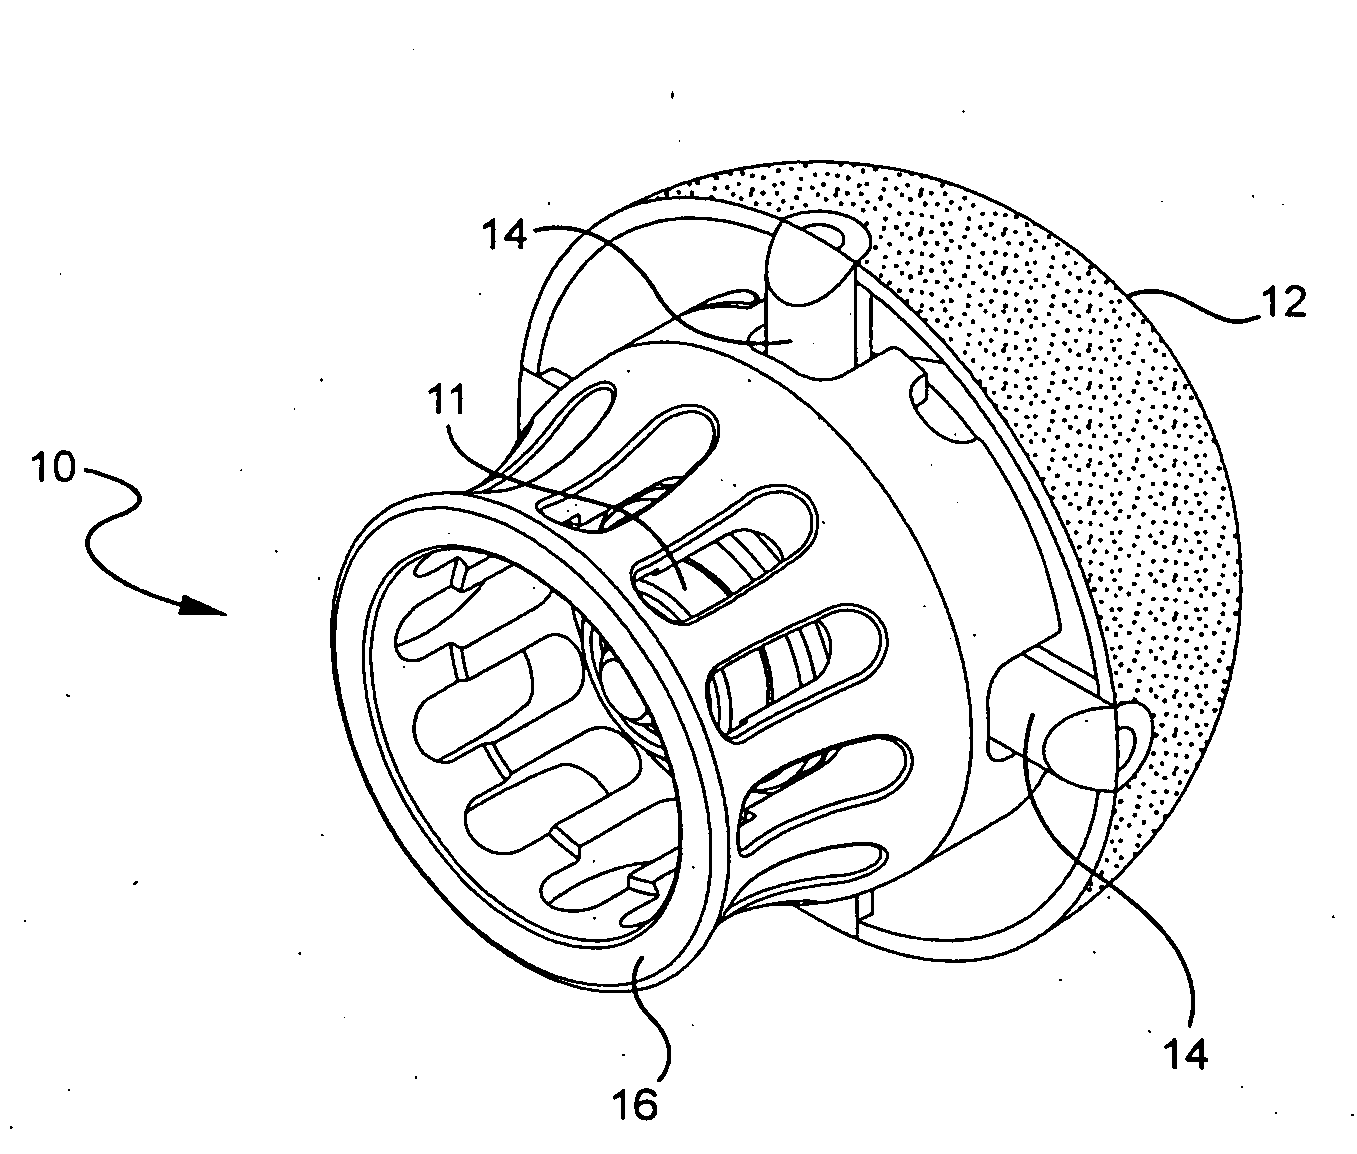 Acetabular reamer connection mechanism